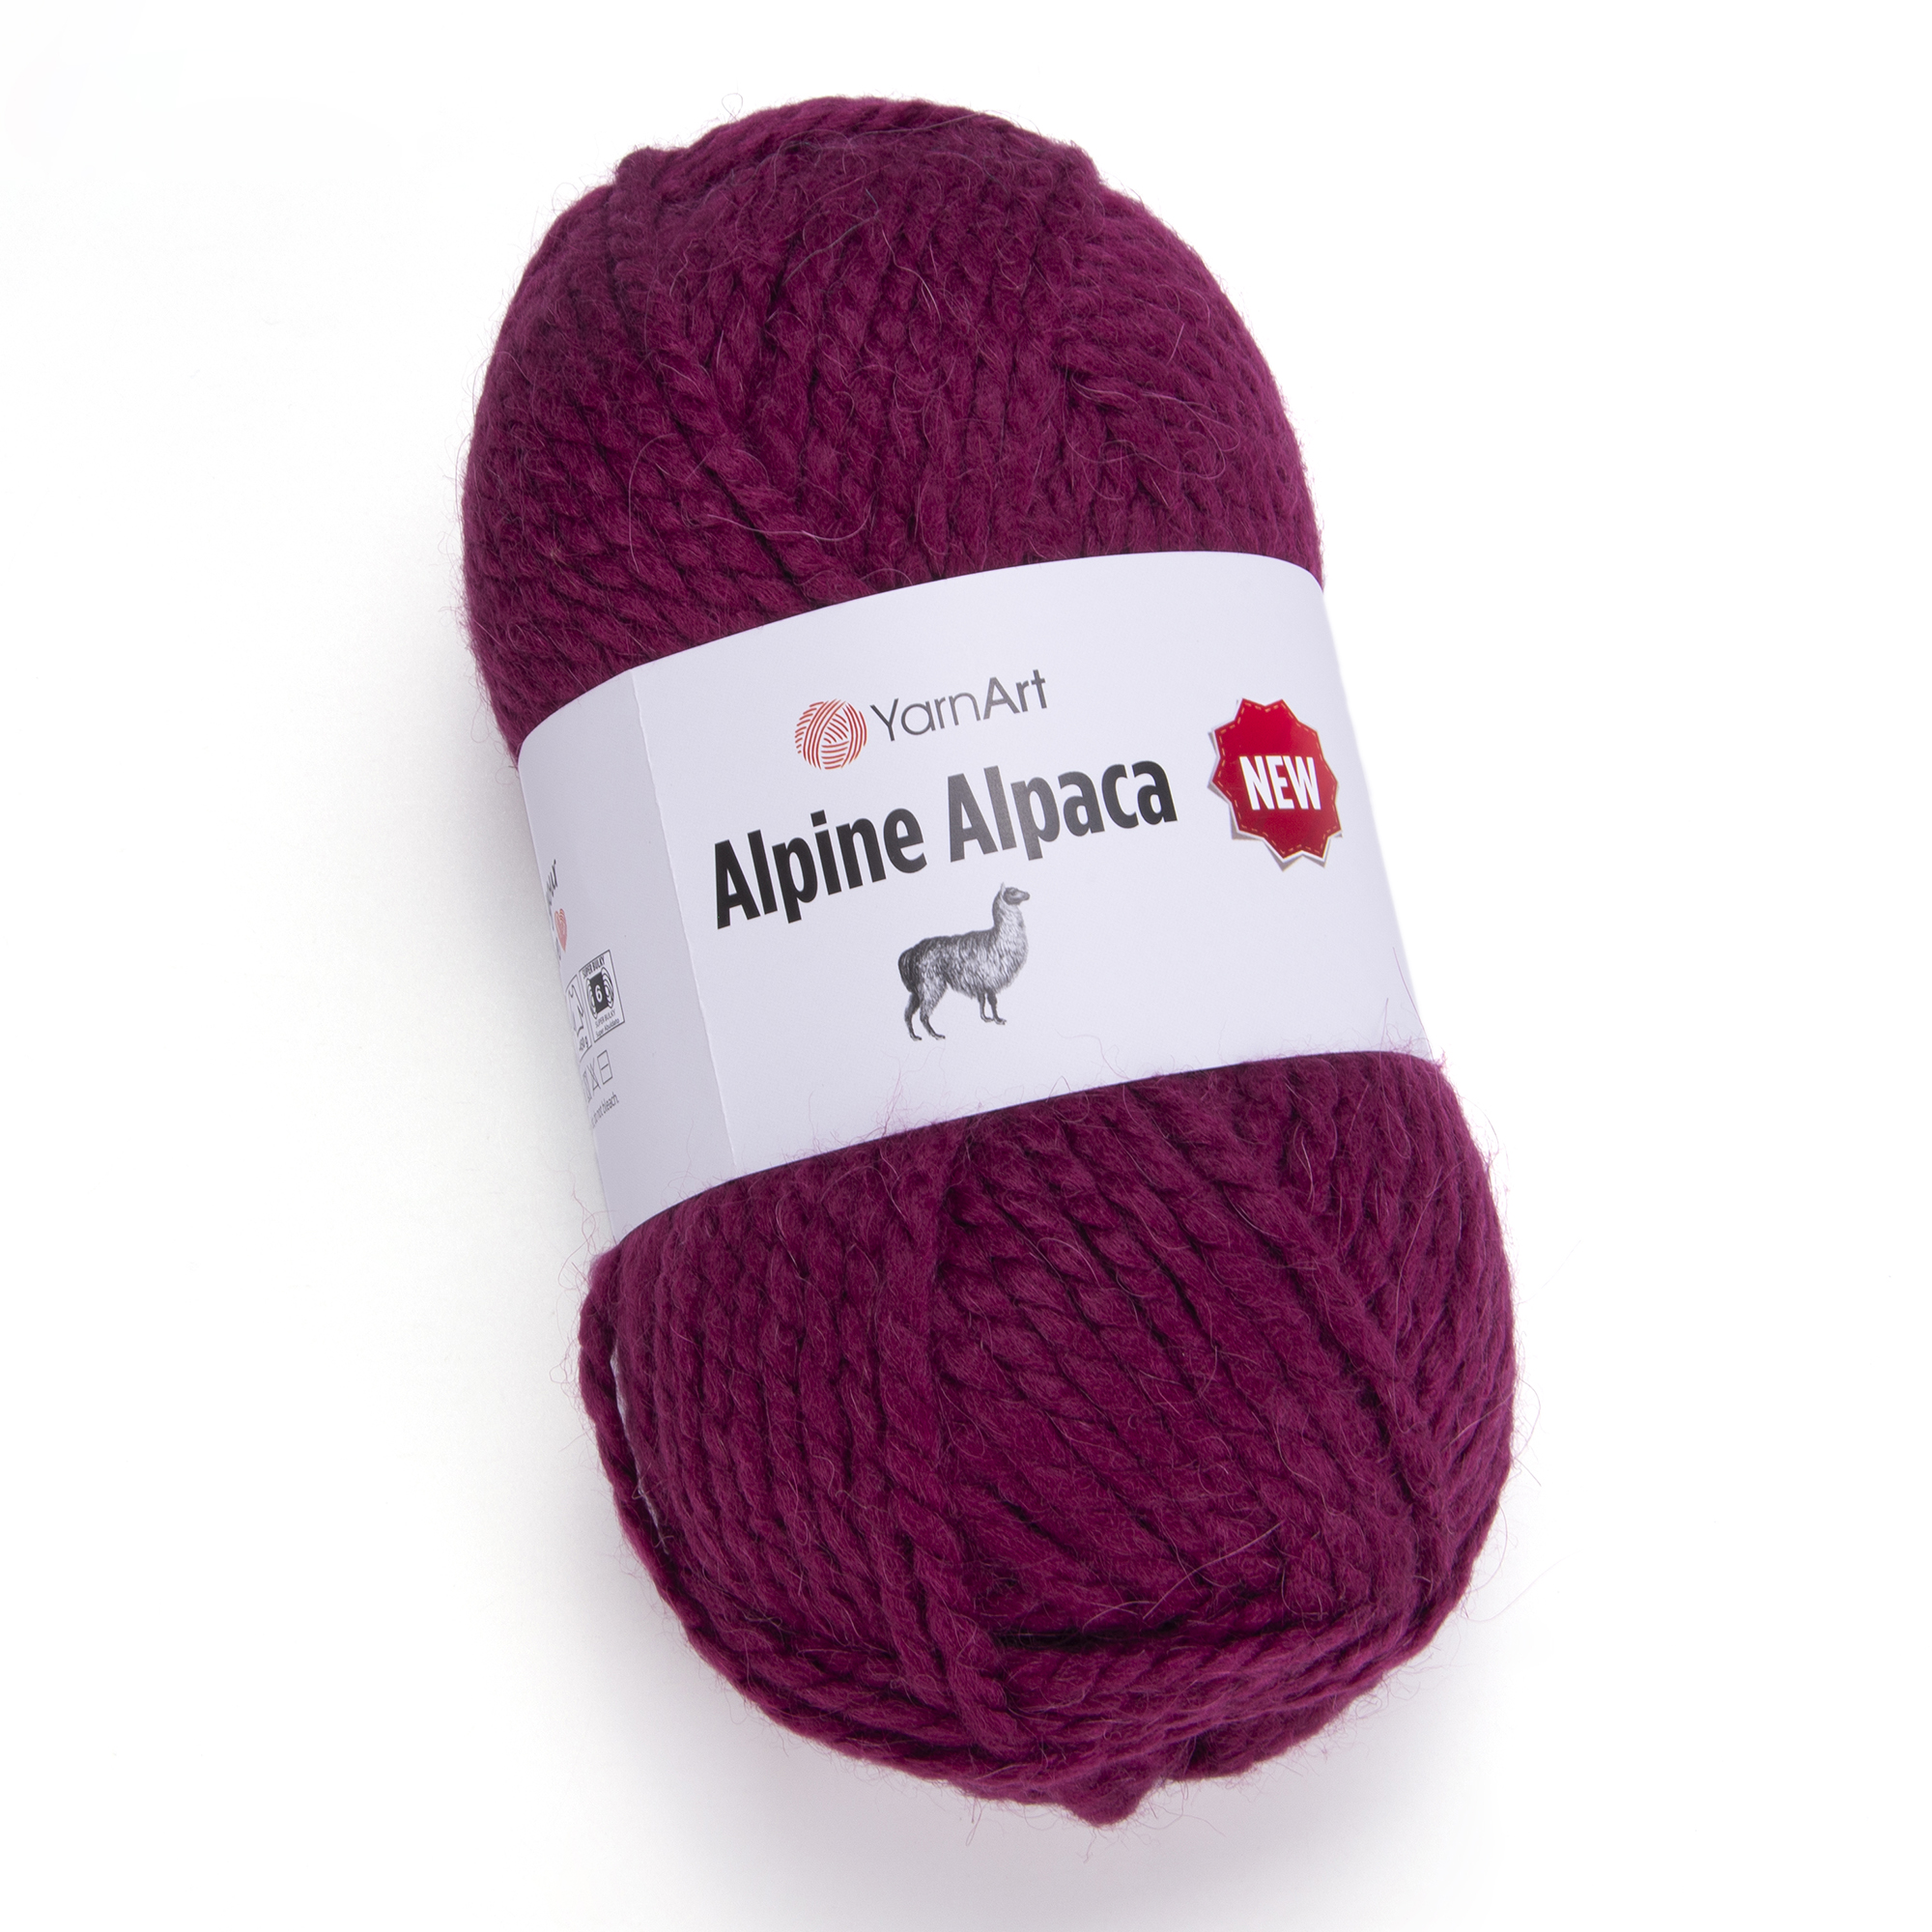 Alpine Alpaca New – 1441